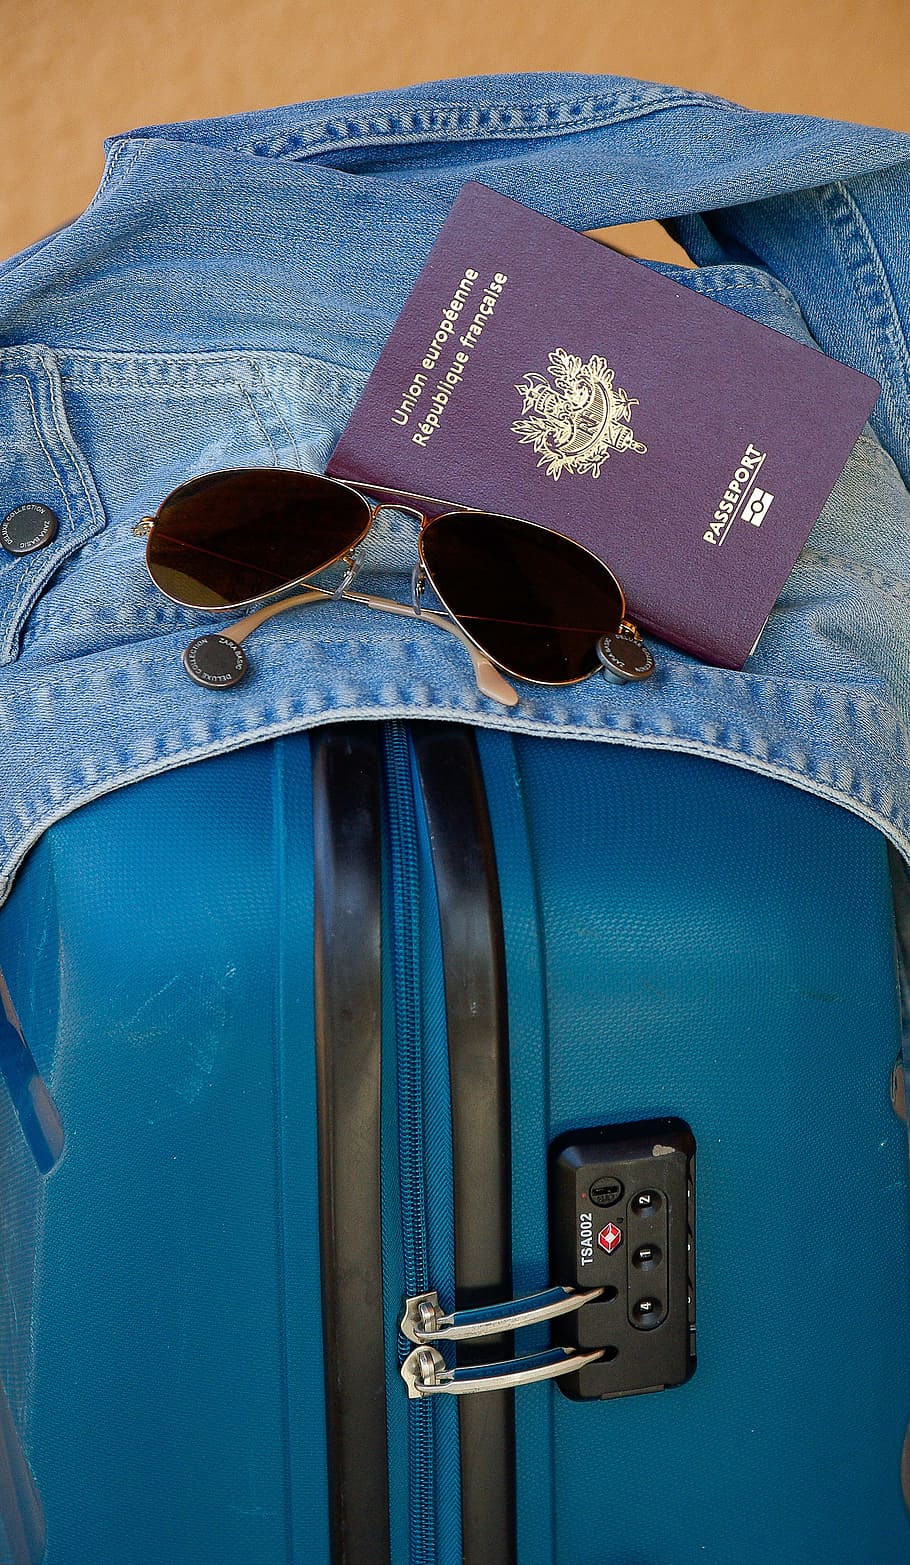 aviator sunglasses, passport book, denim jacket, suitcase, departure, travel, passport, sunglasses, blue, day